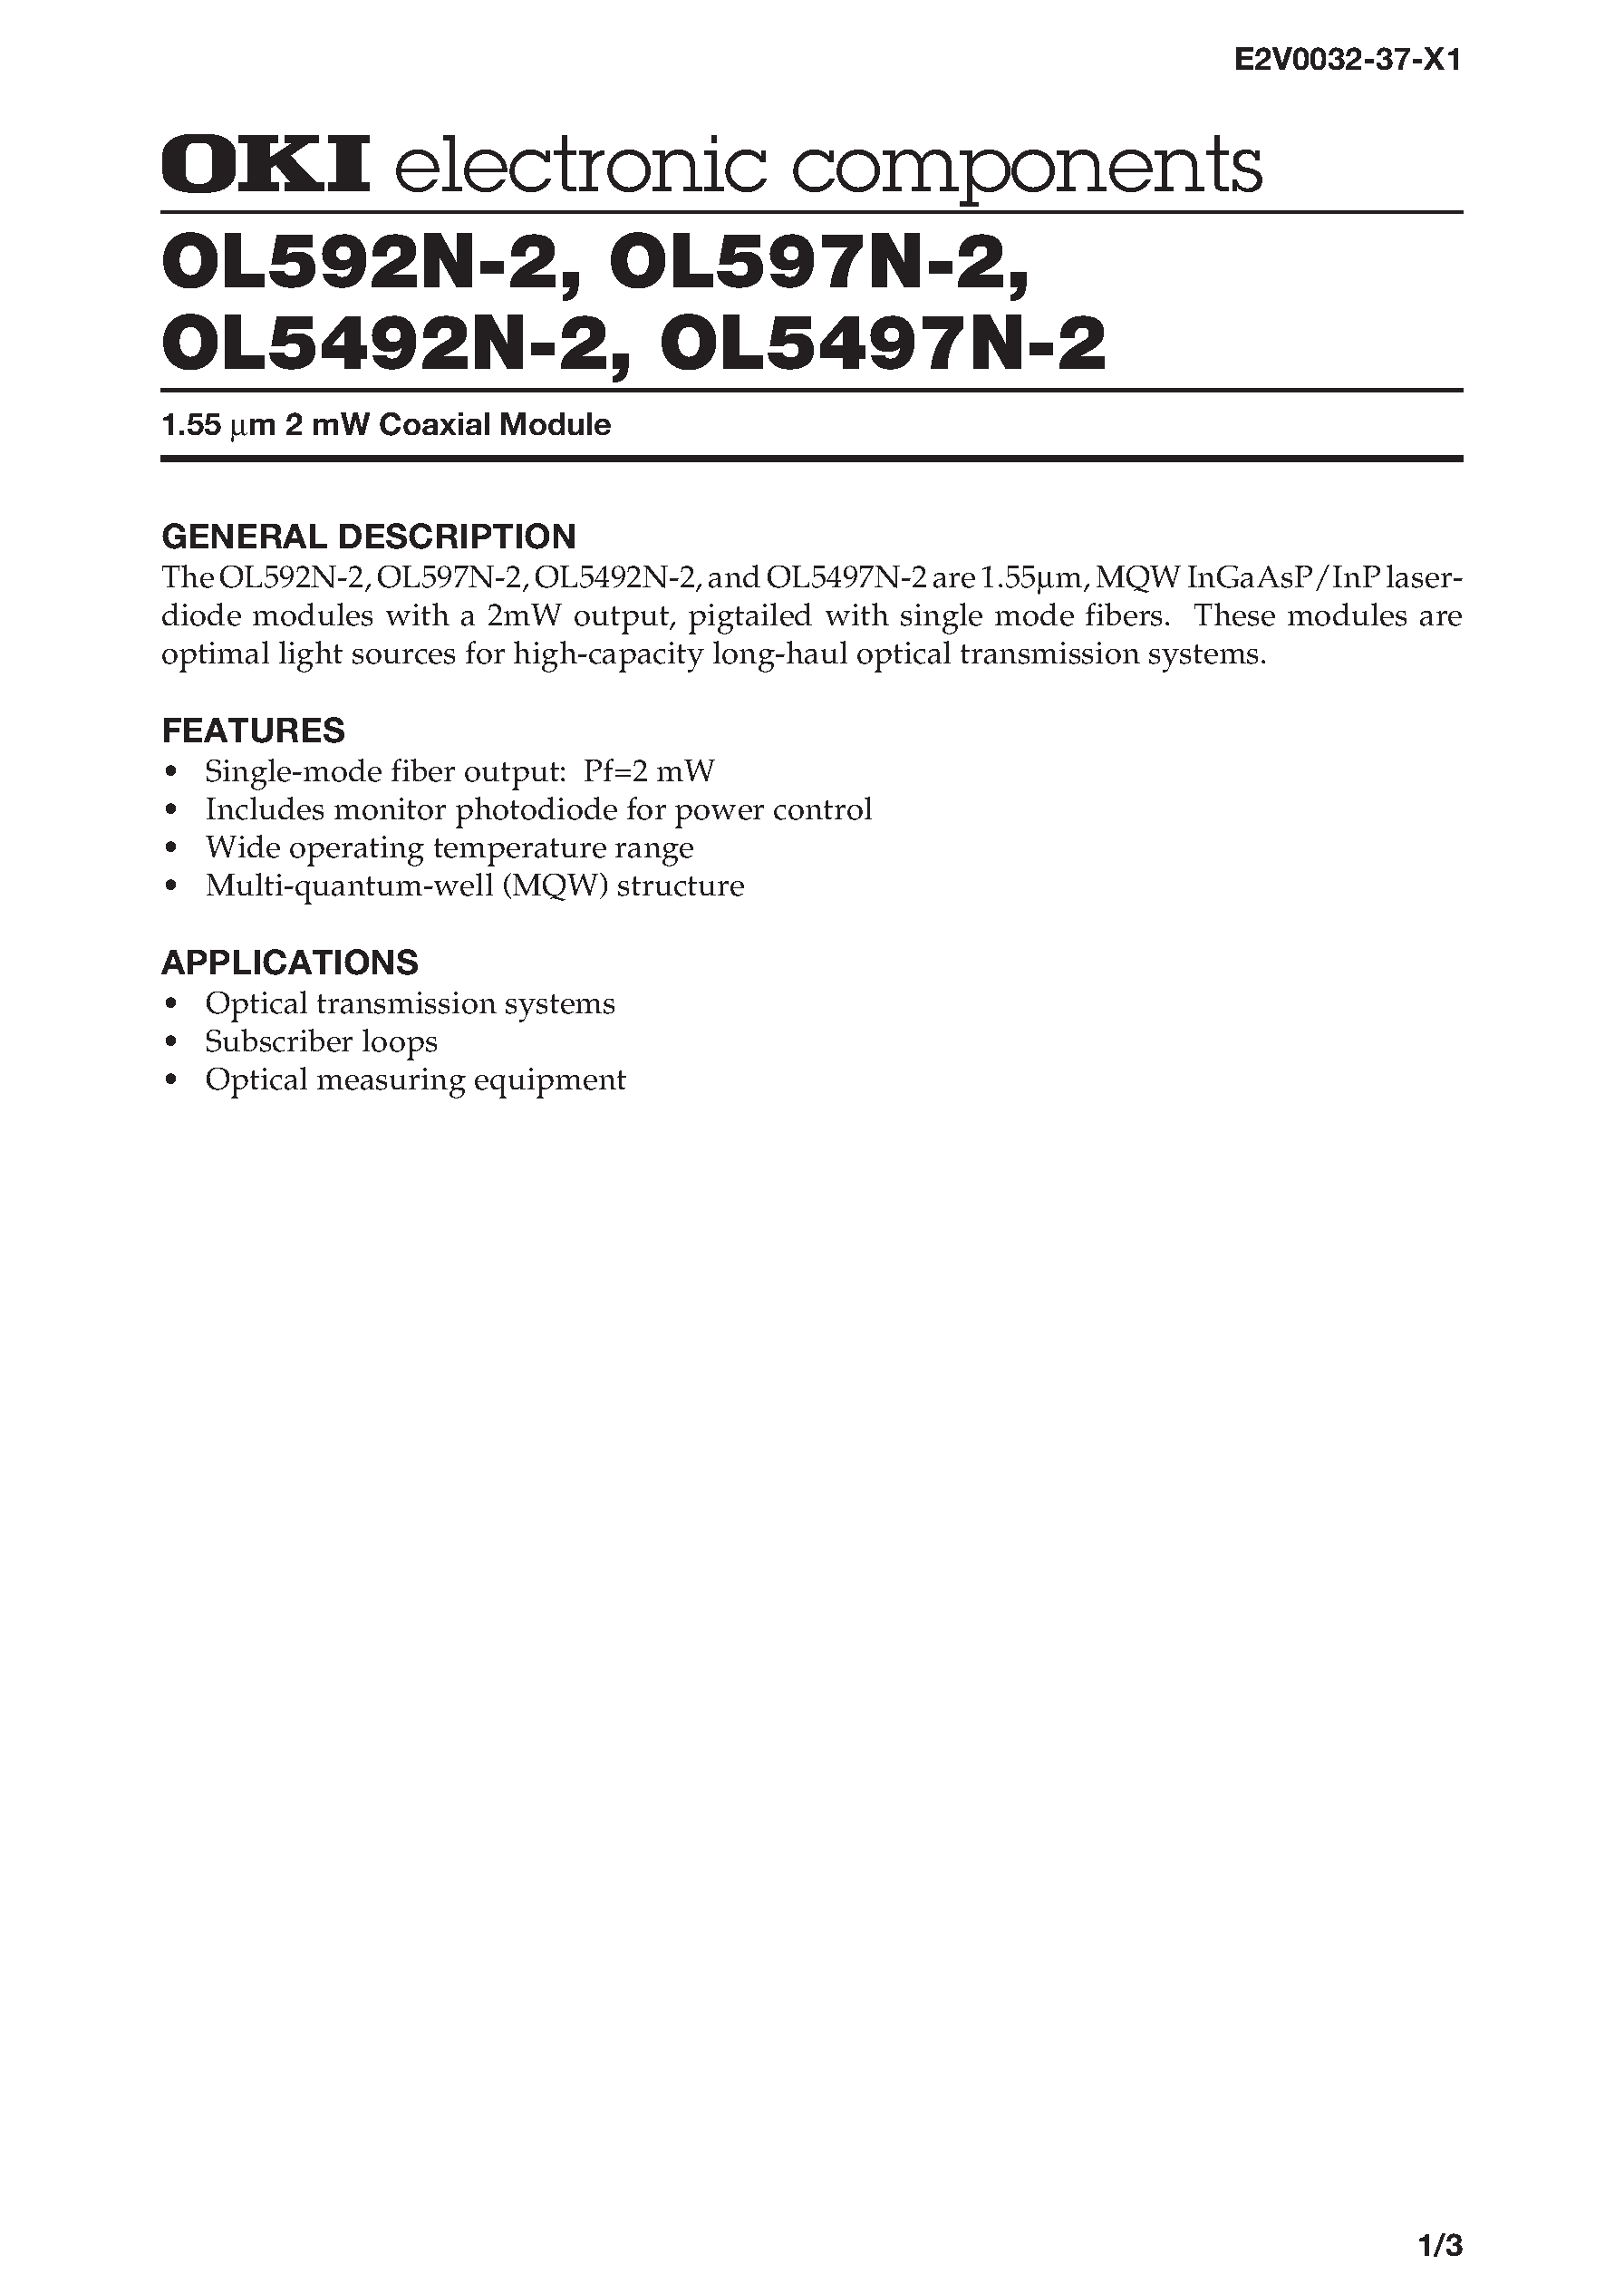 Datasheet OL597N-2 - 1.55 m 2 mW Coaxial Module page 1